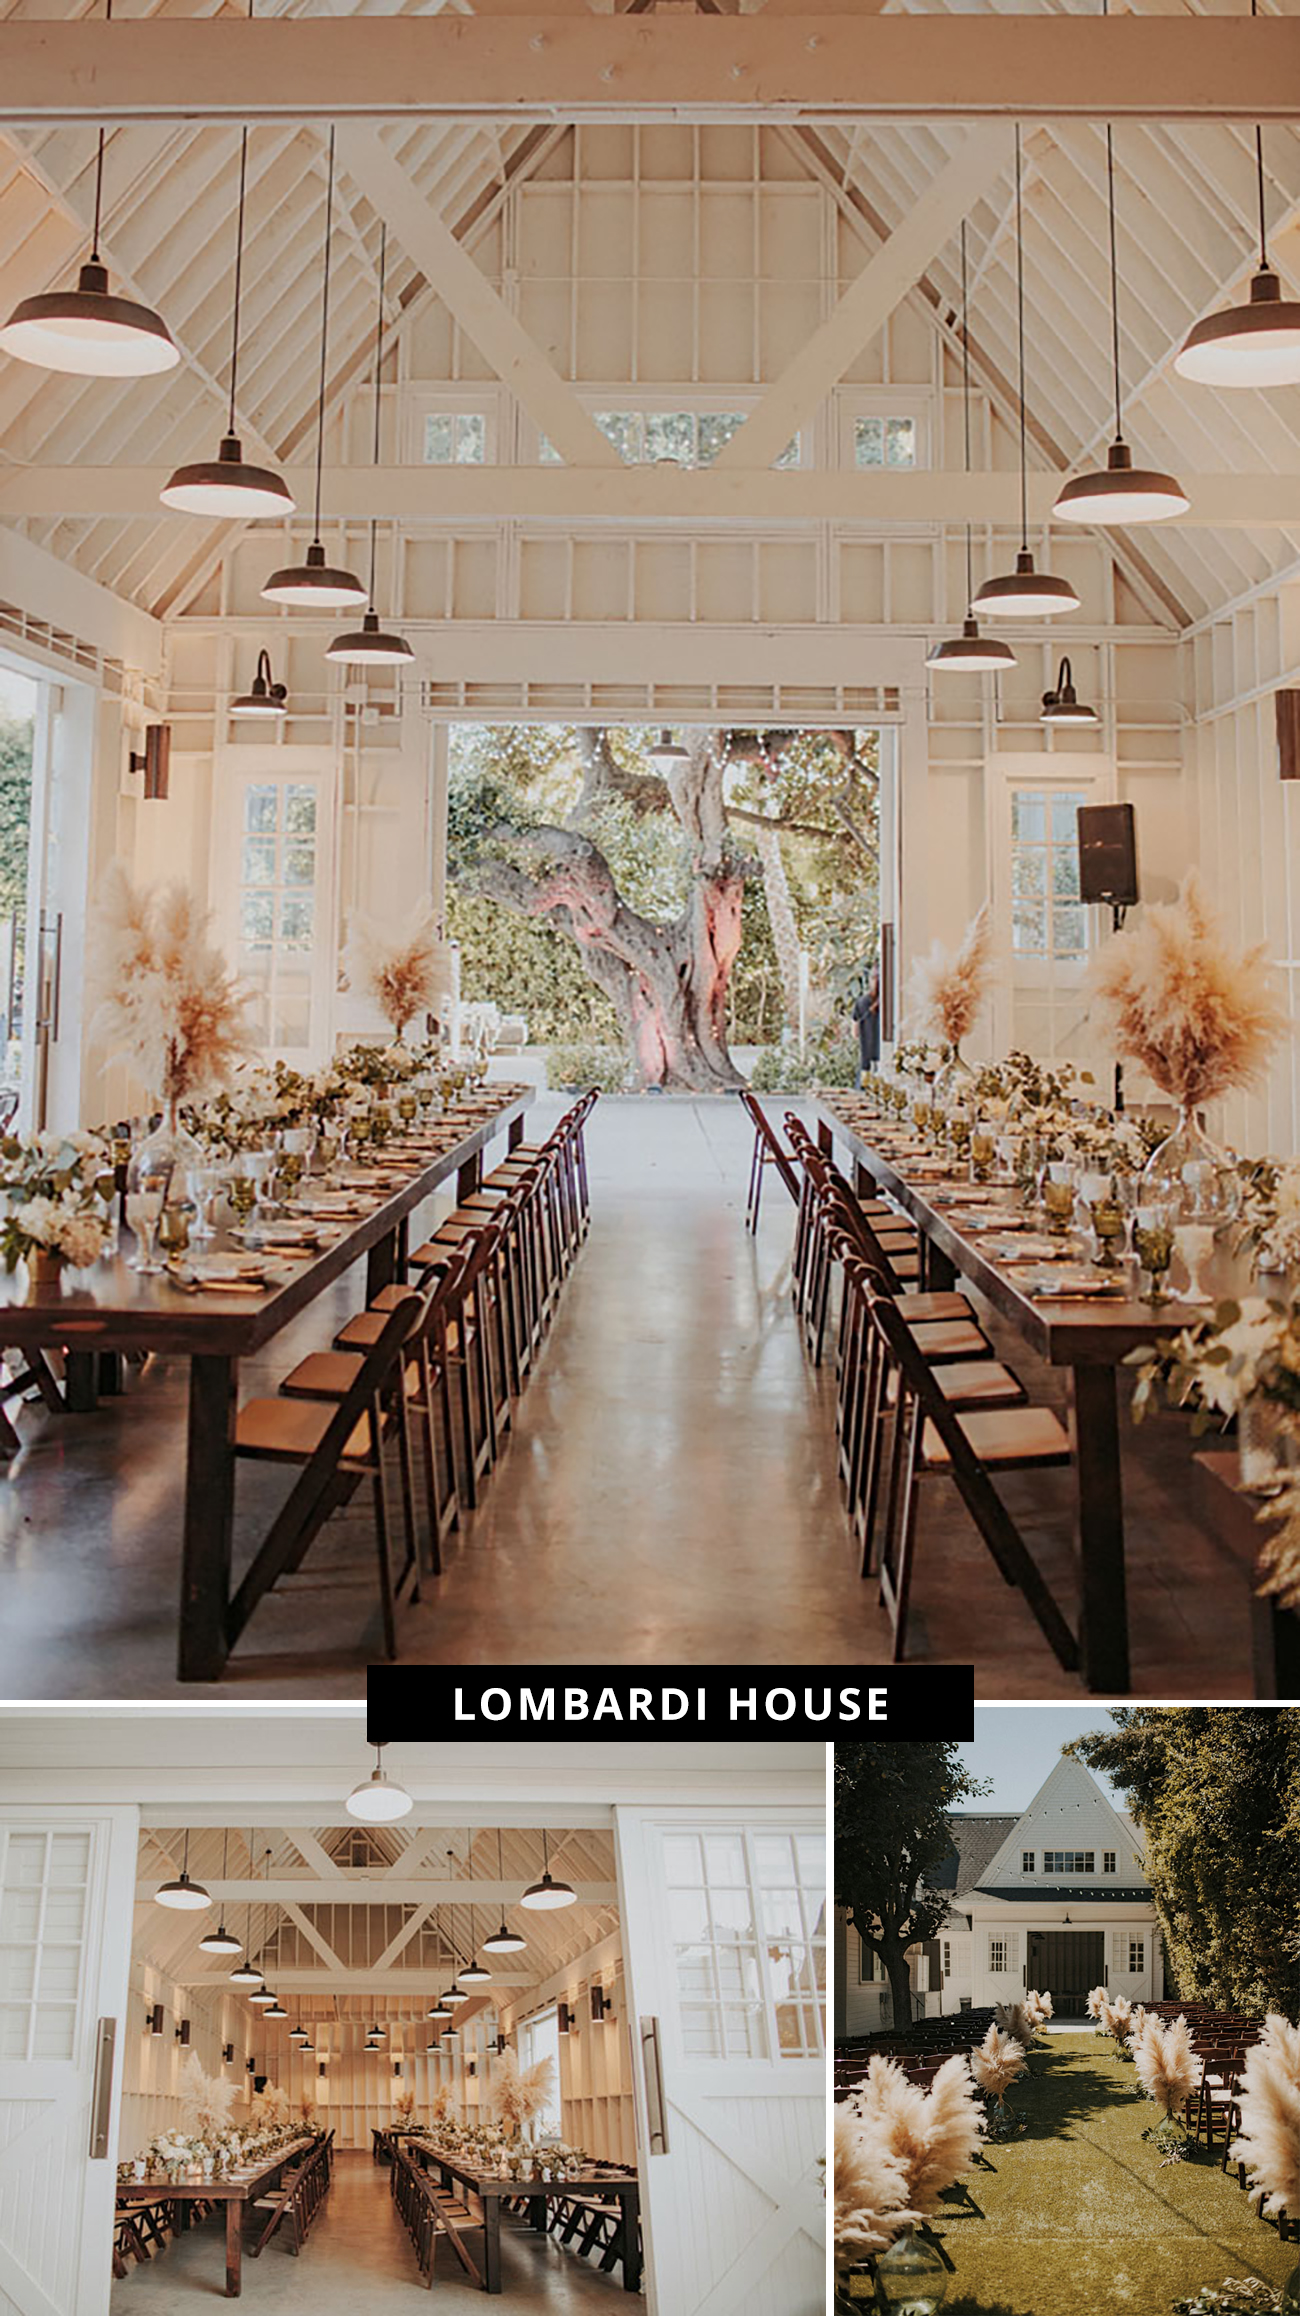 Lombardi House wedding venue